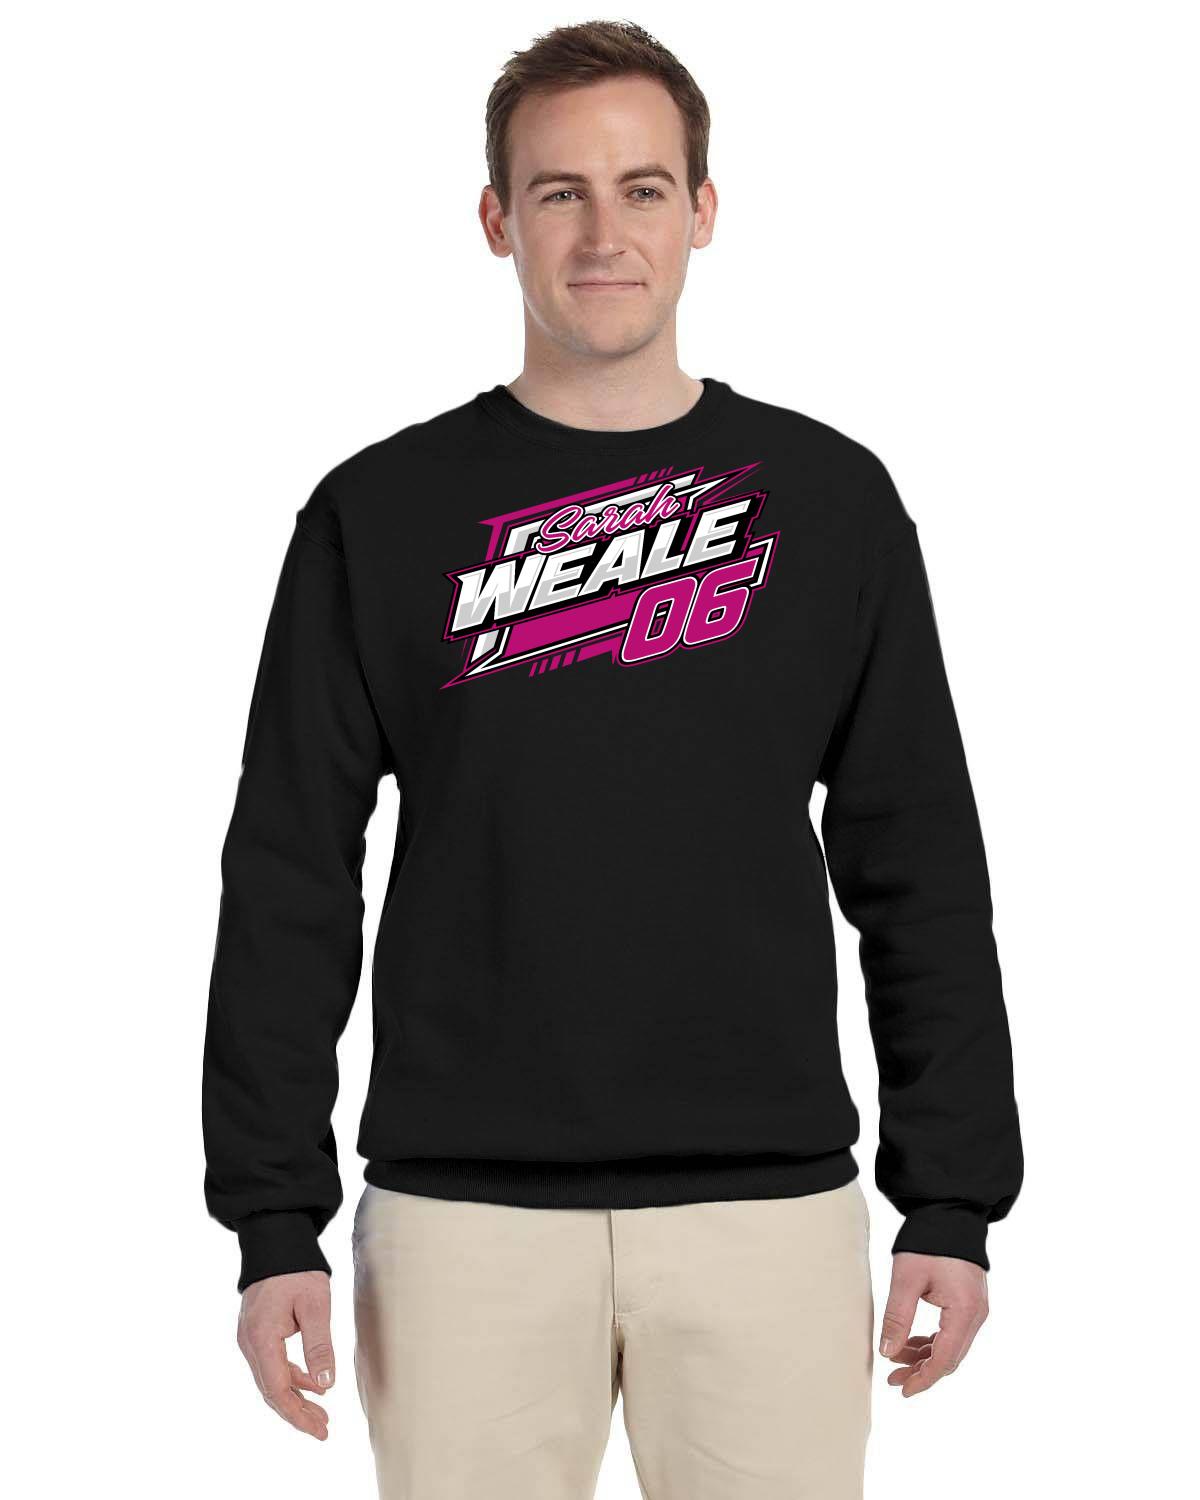 Sarah Weale Racing Crew neck sweater